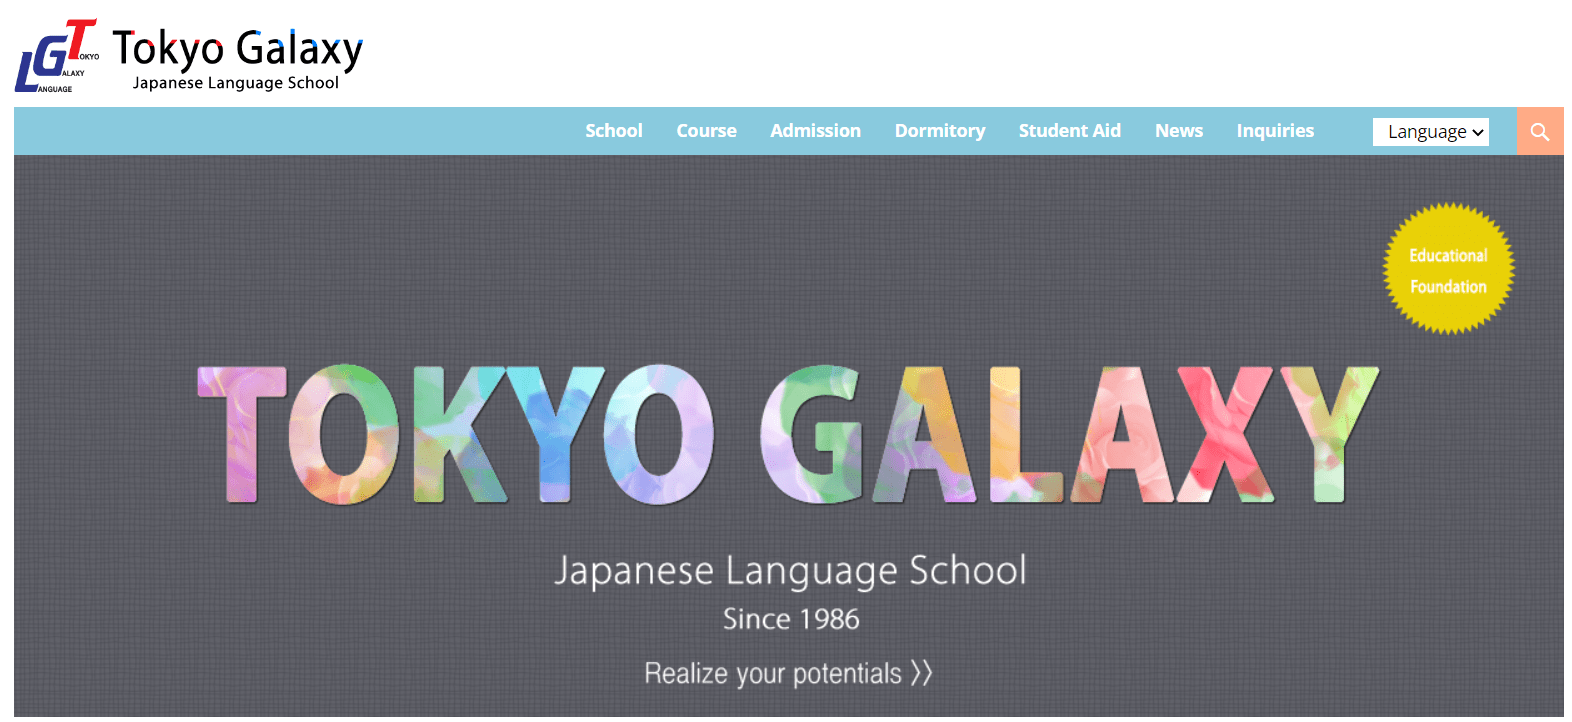 Tokyo Galaxy Japanese Language School website